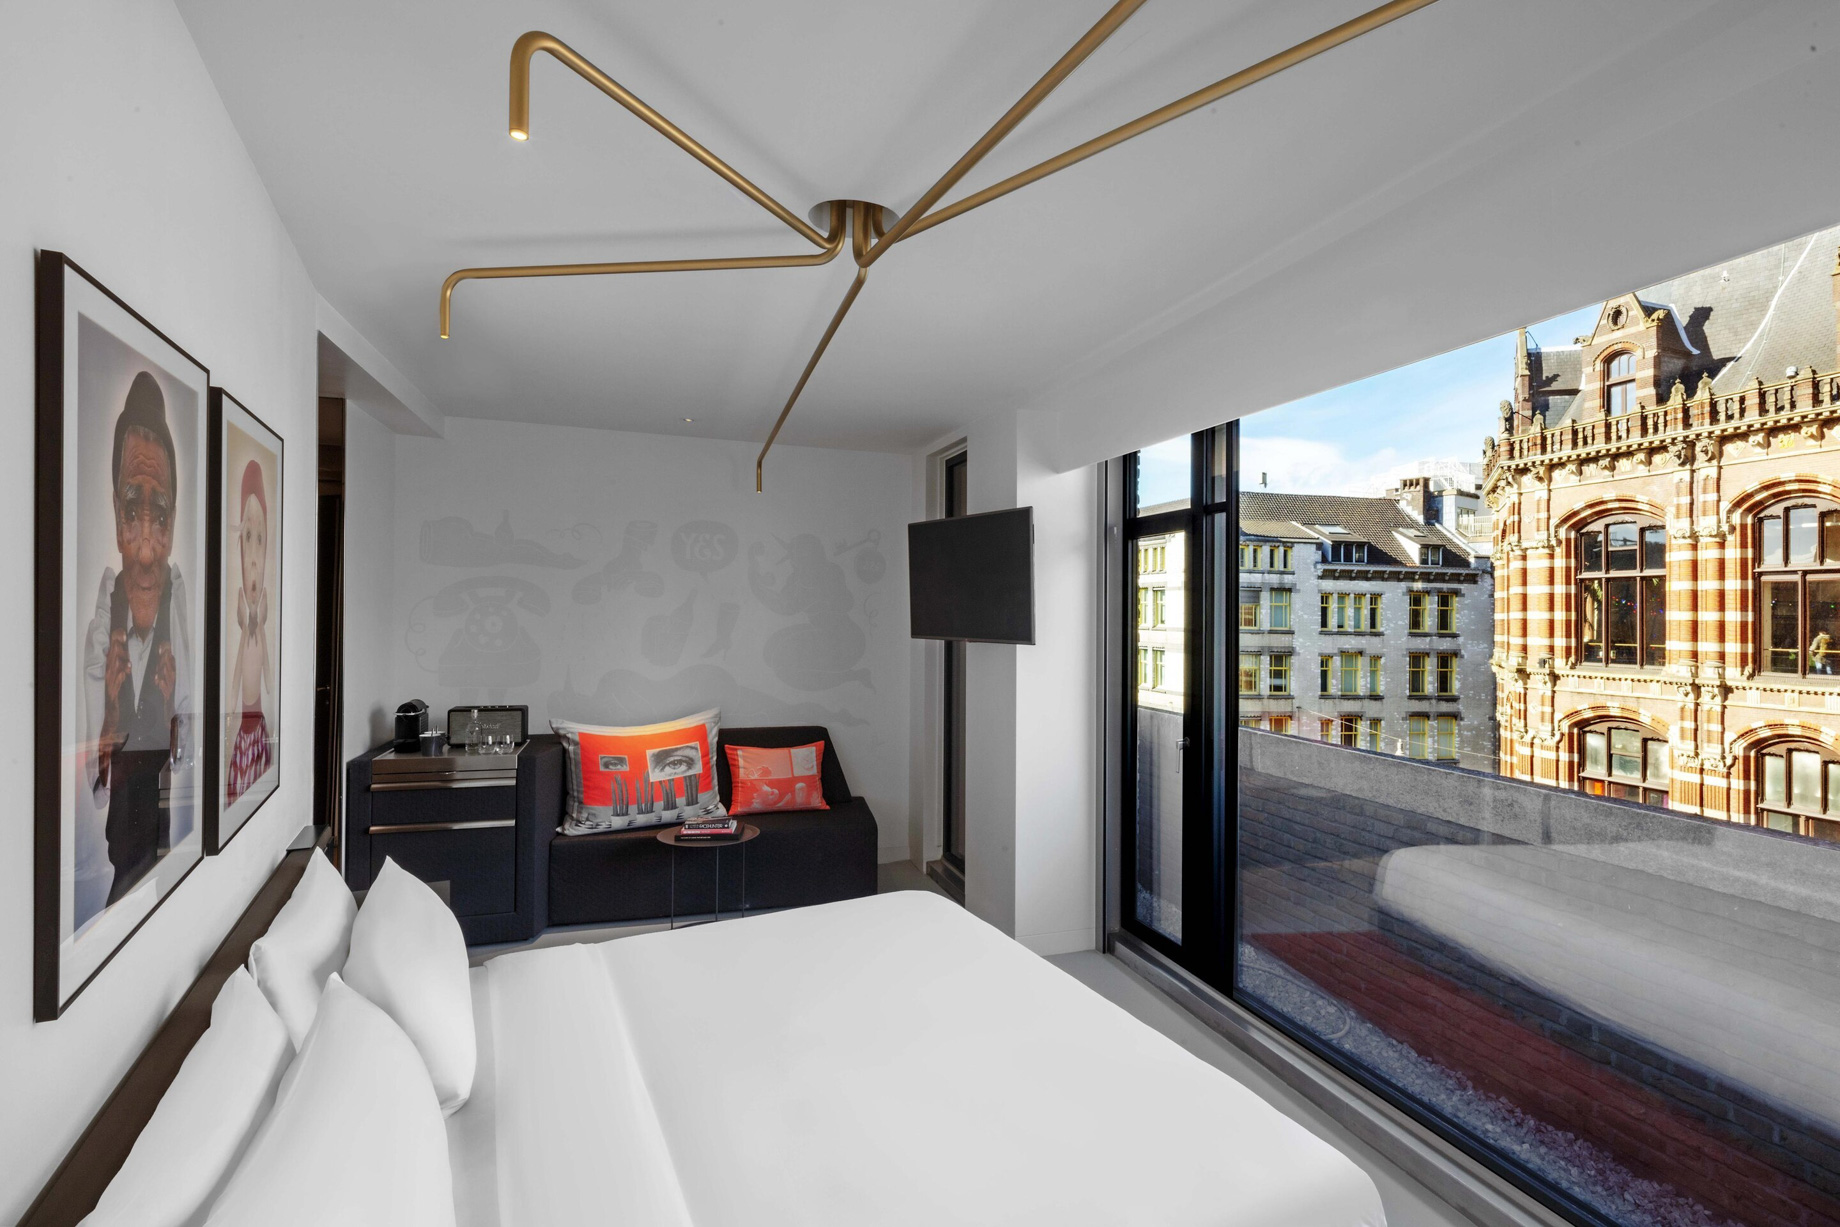 W Amsterdam Hotel – Amsterdam, Netherlands – Wonderful Exchange Guest Room Balcony View